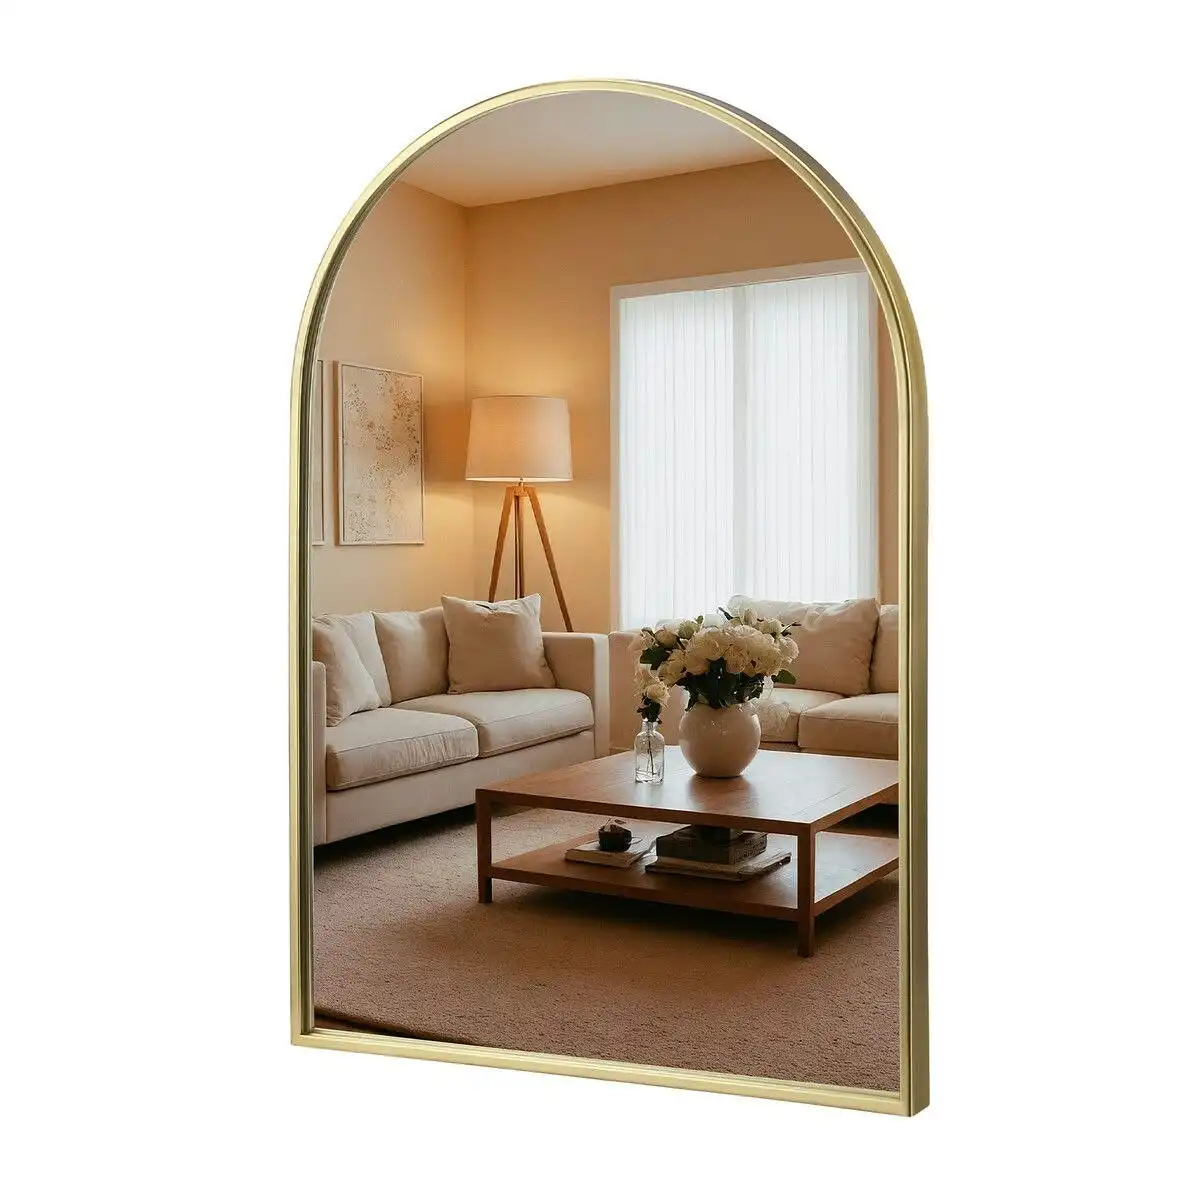 LUXSUITE Arch Wall Vanity Mirror Bathroom Large Gold Standing Hallway Bedroom Decorative Mount Makeup Shower Shaving